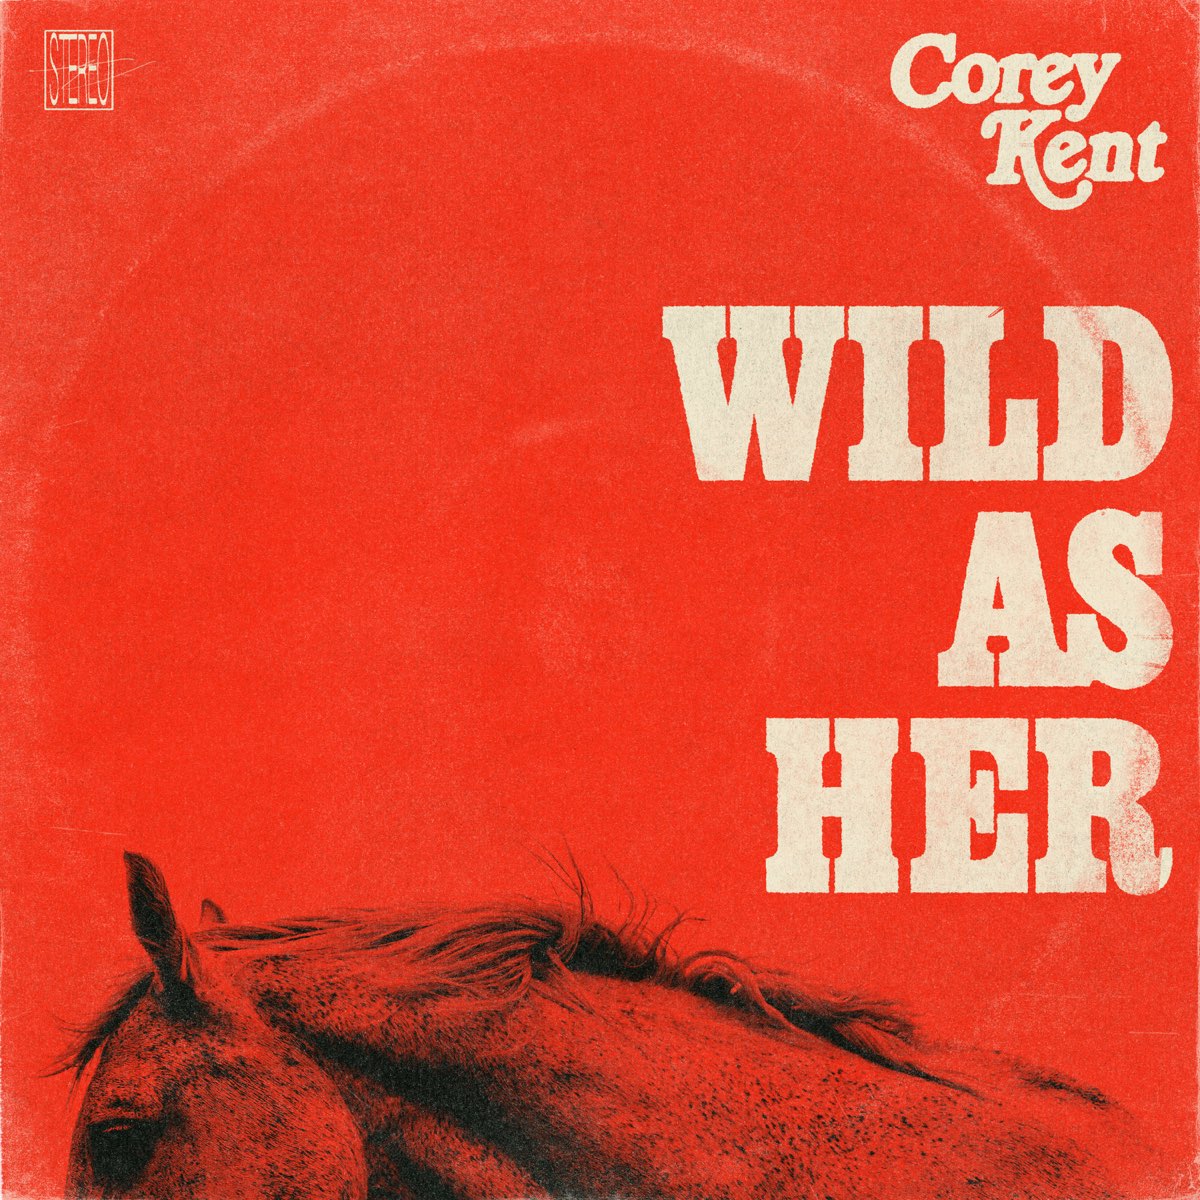 Corey Kent — Wild as Her cover artwork